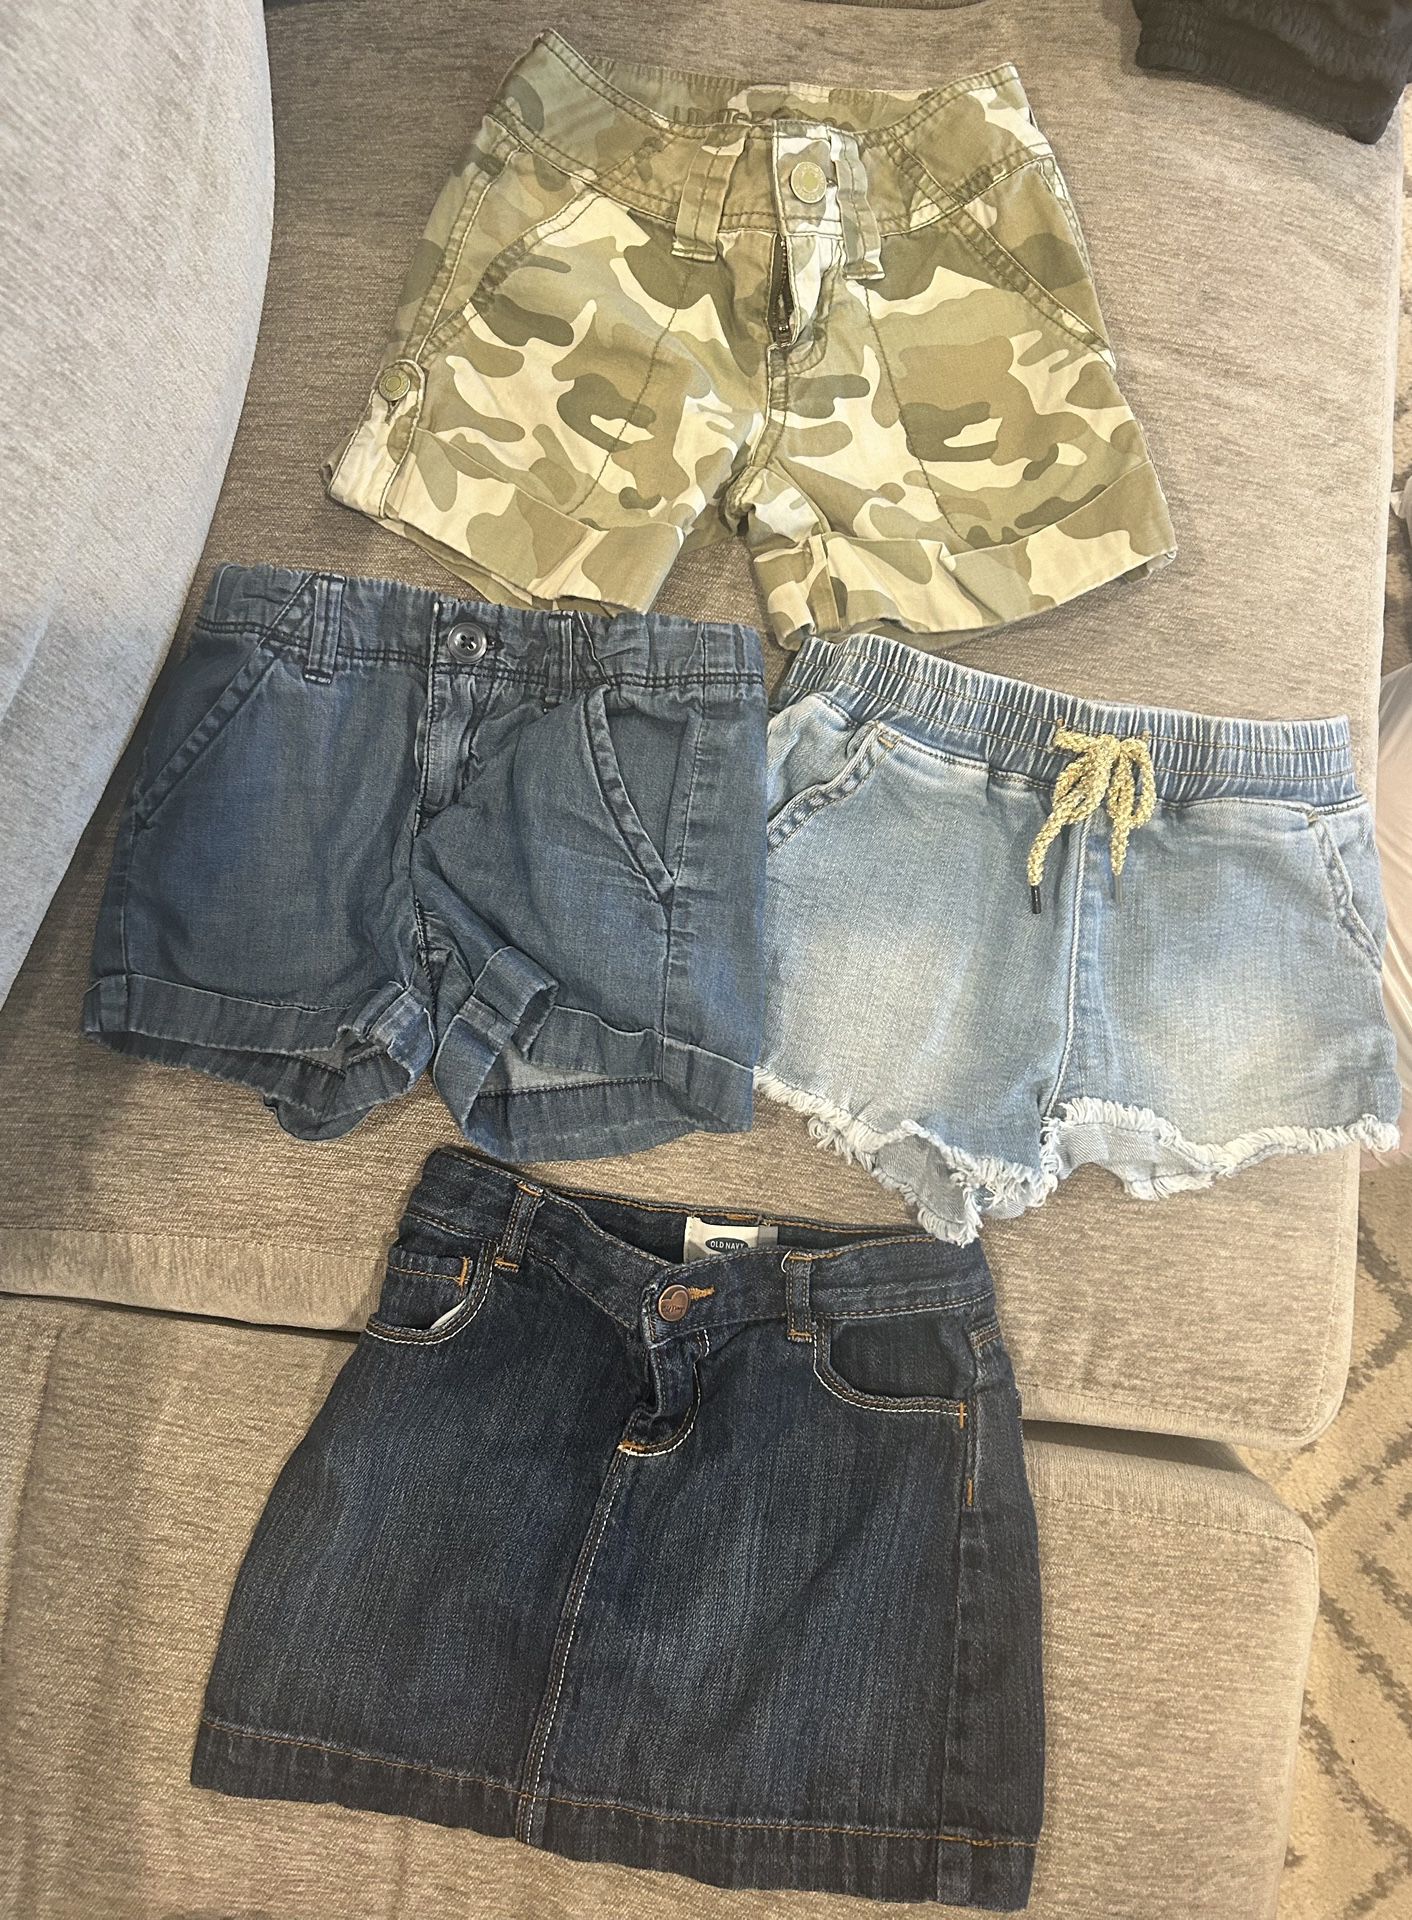 Girls Shorts & Skirt - Size 5 